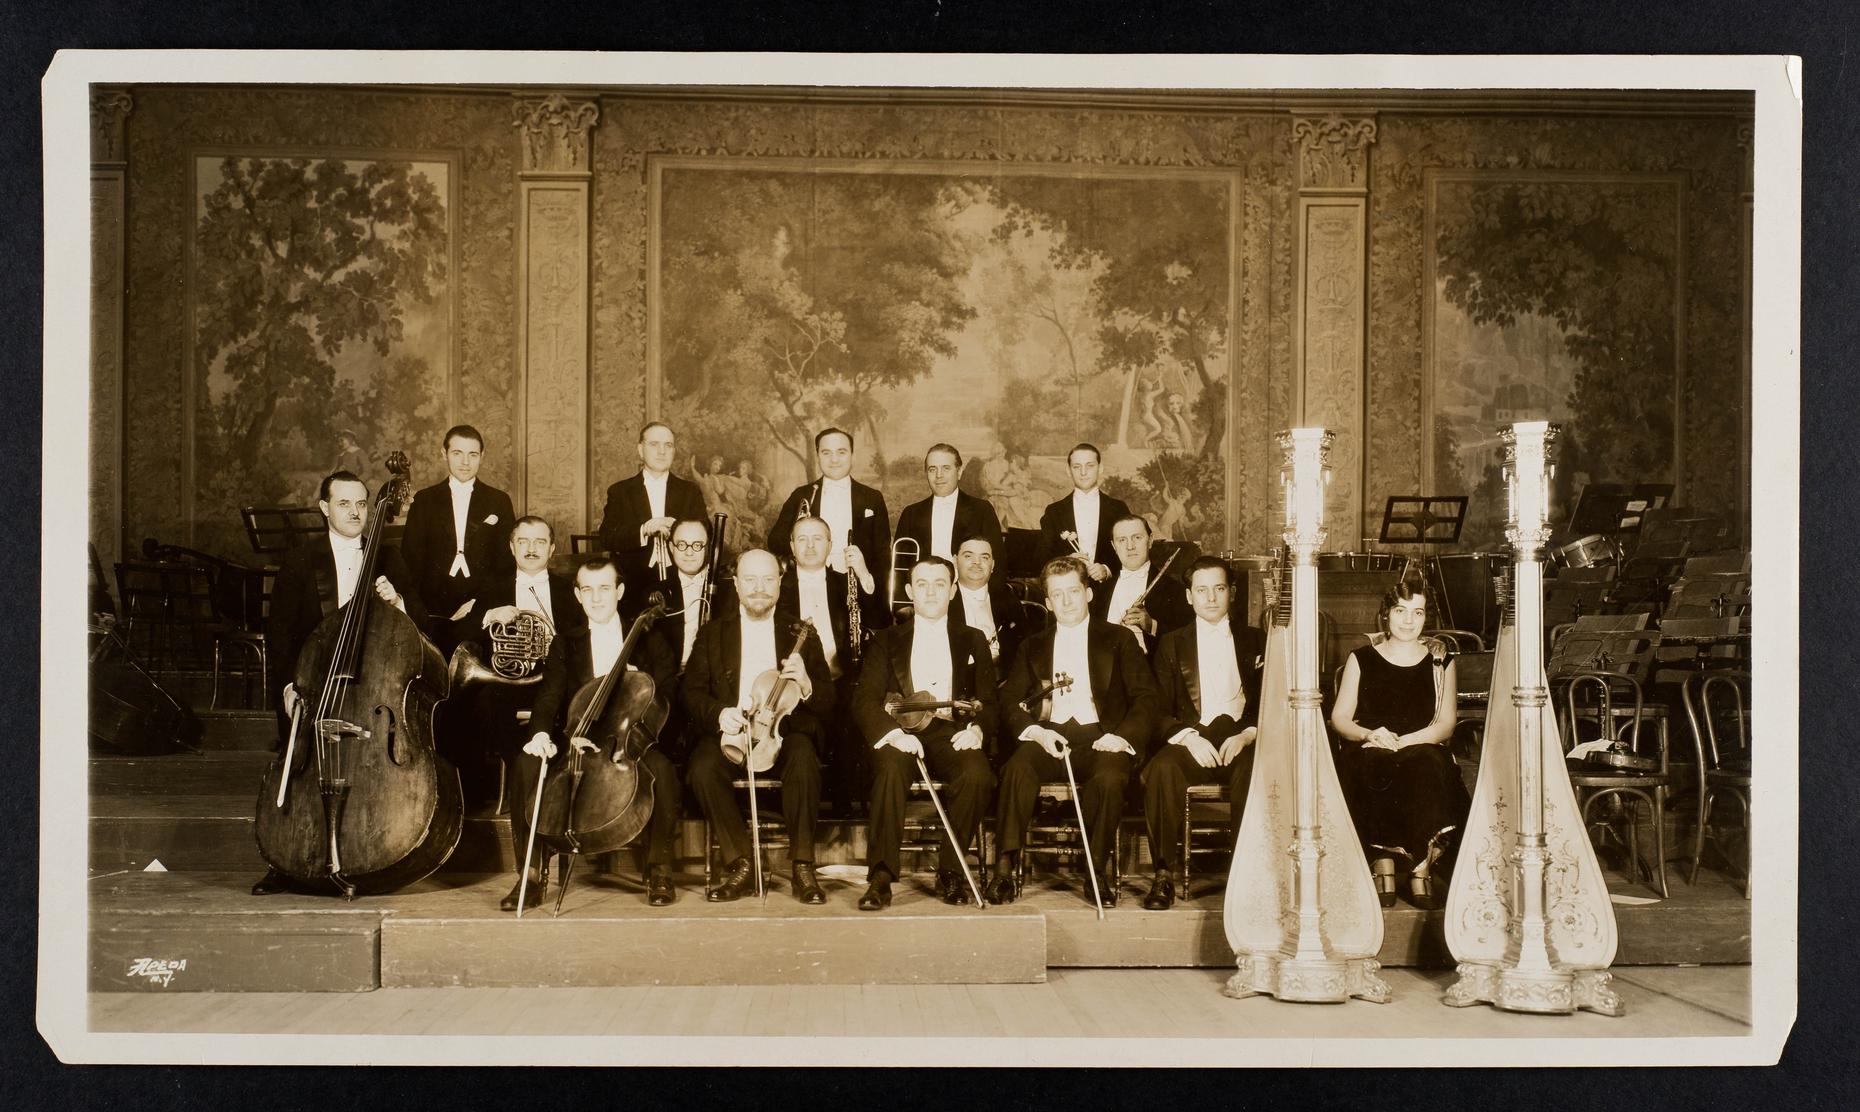 A Noteworthy History of the New York Philharmonic WQXR Features WQXR